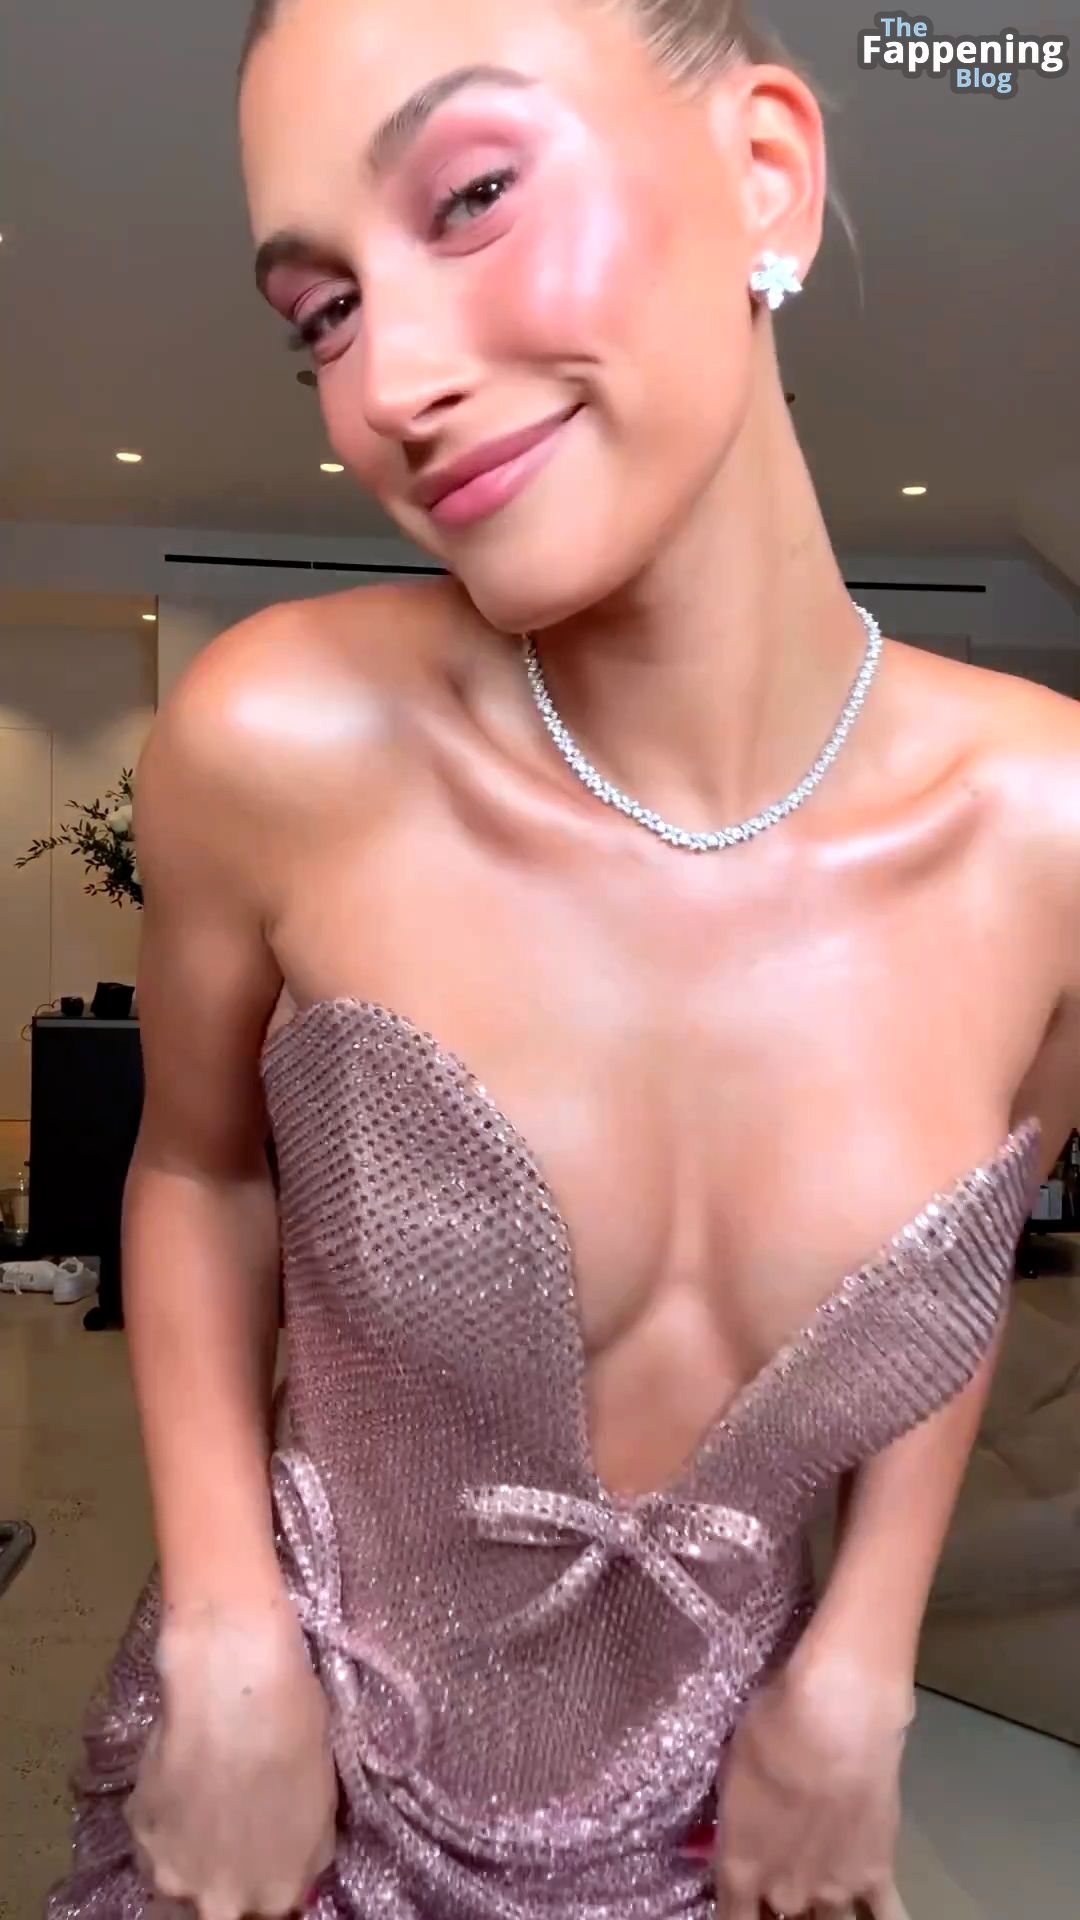 Hailey Bieber Displays Her Stunning Figure as She Celebrates Anniversary of Her Rhode Brand (18 Photos + Video)